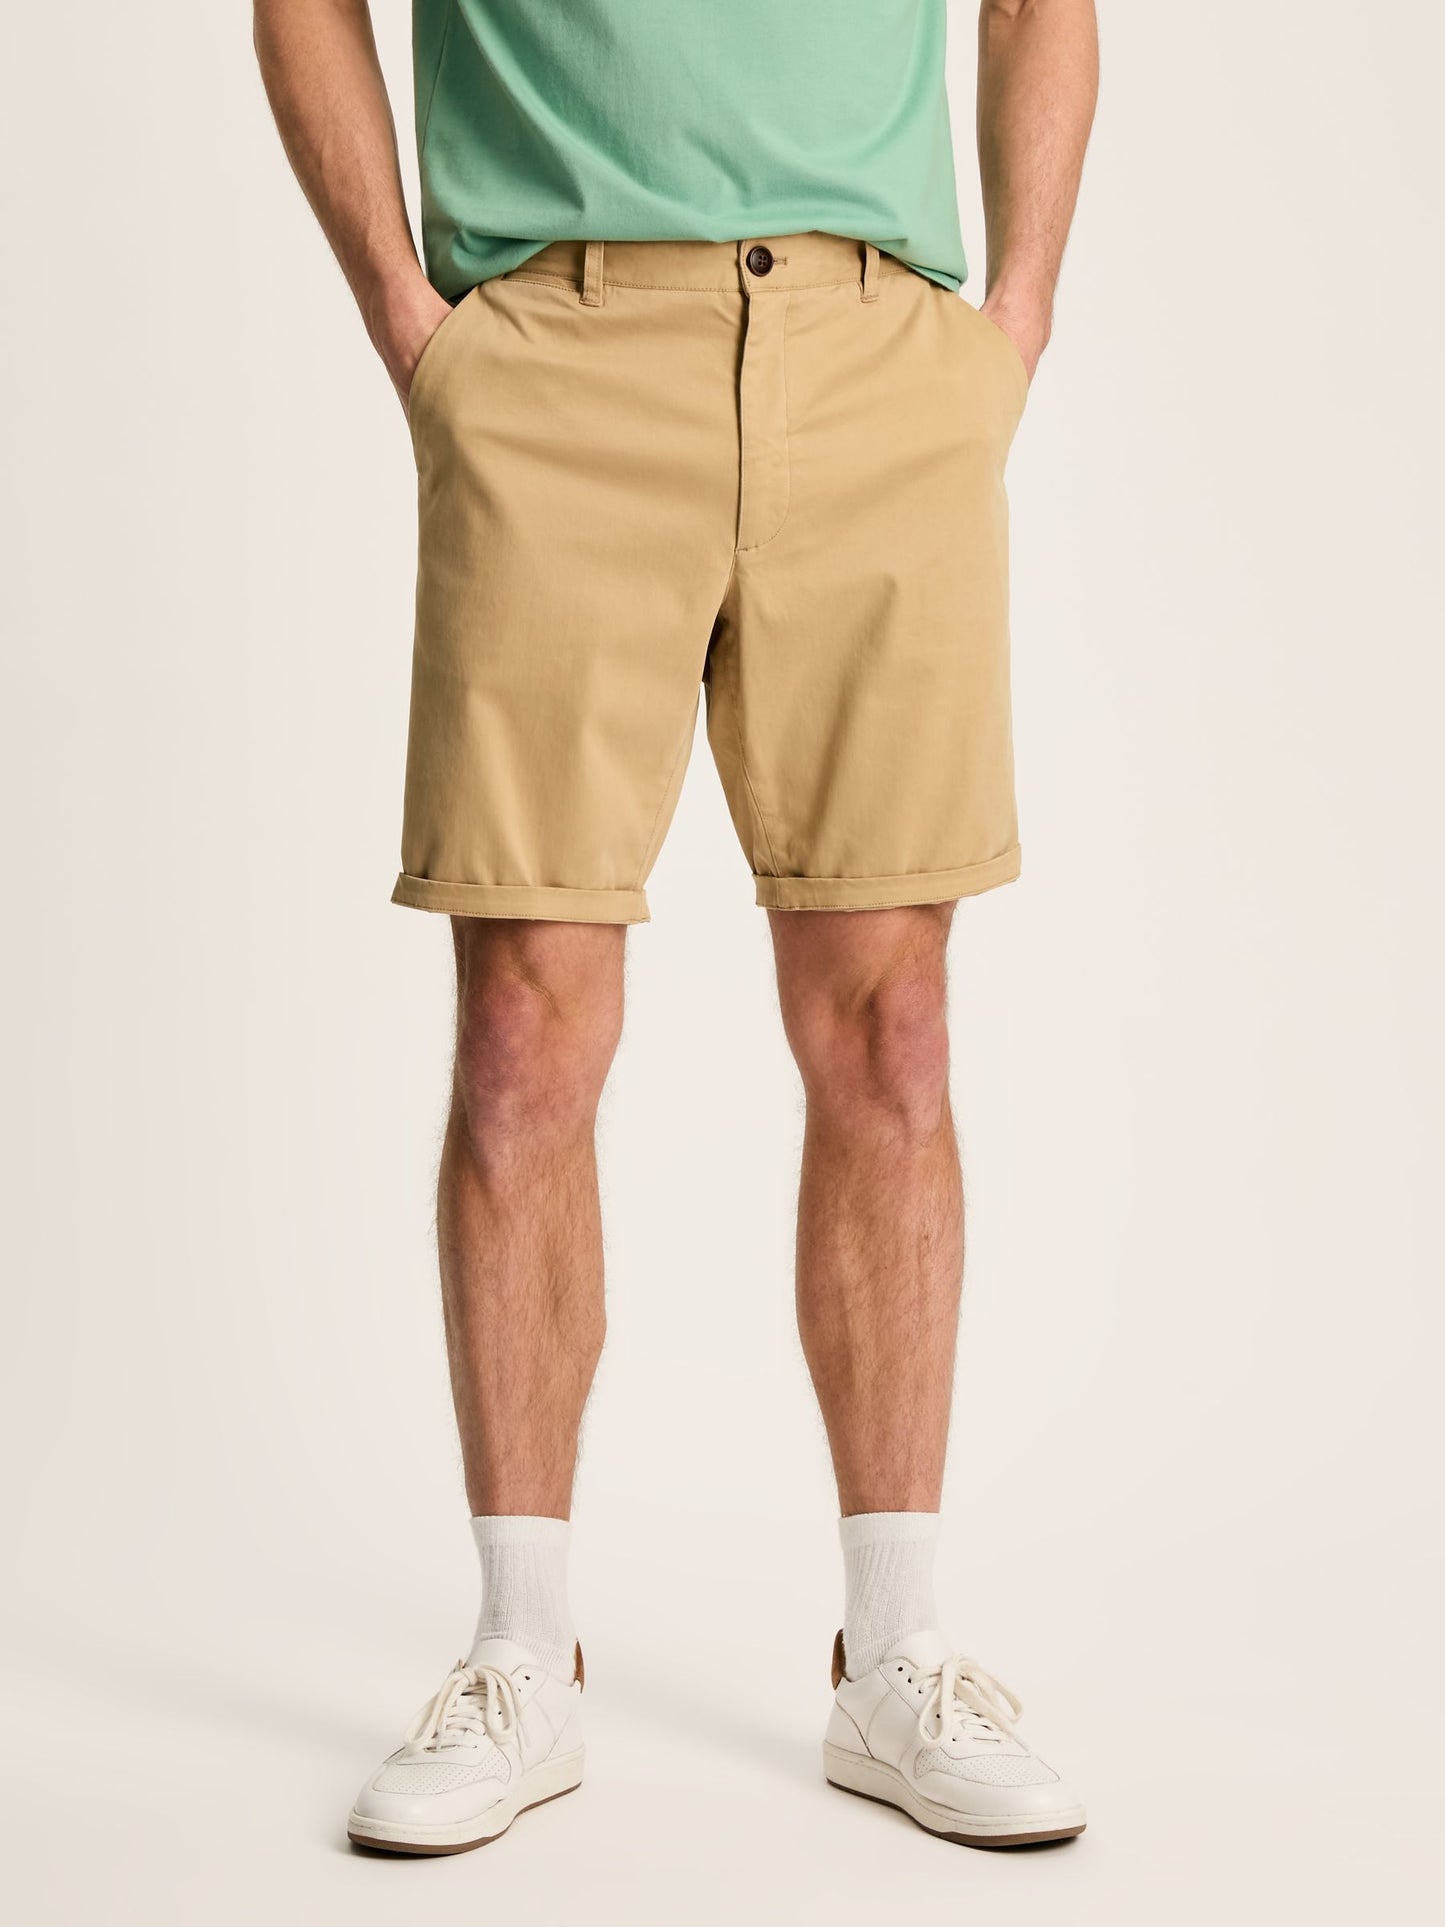 Joules Men's Chino Shorts